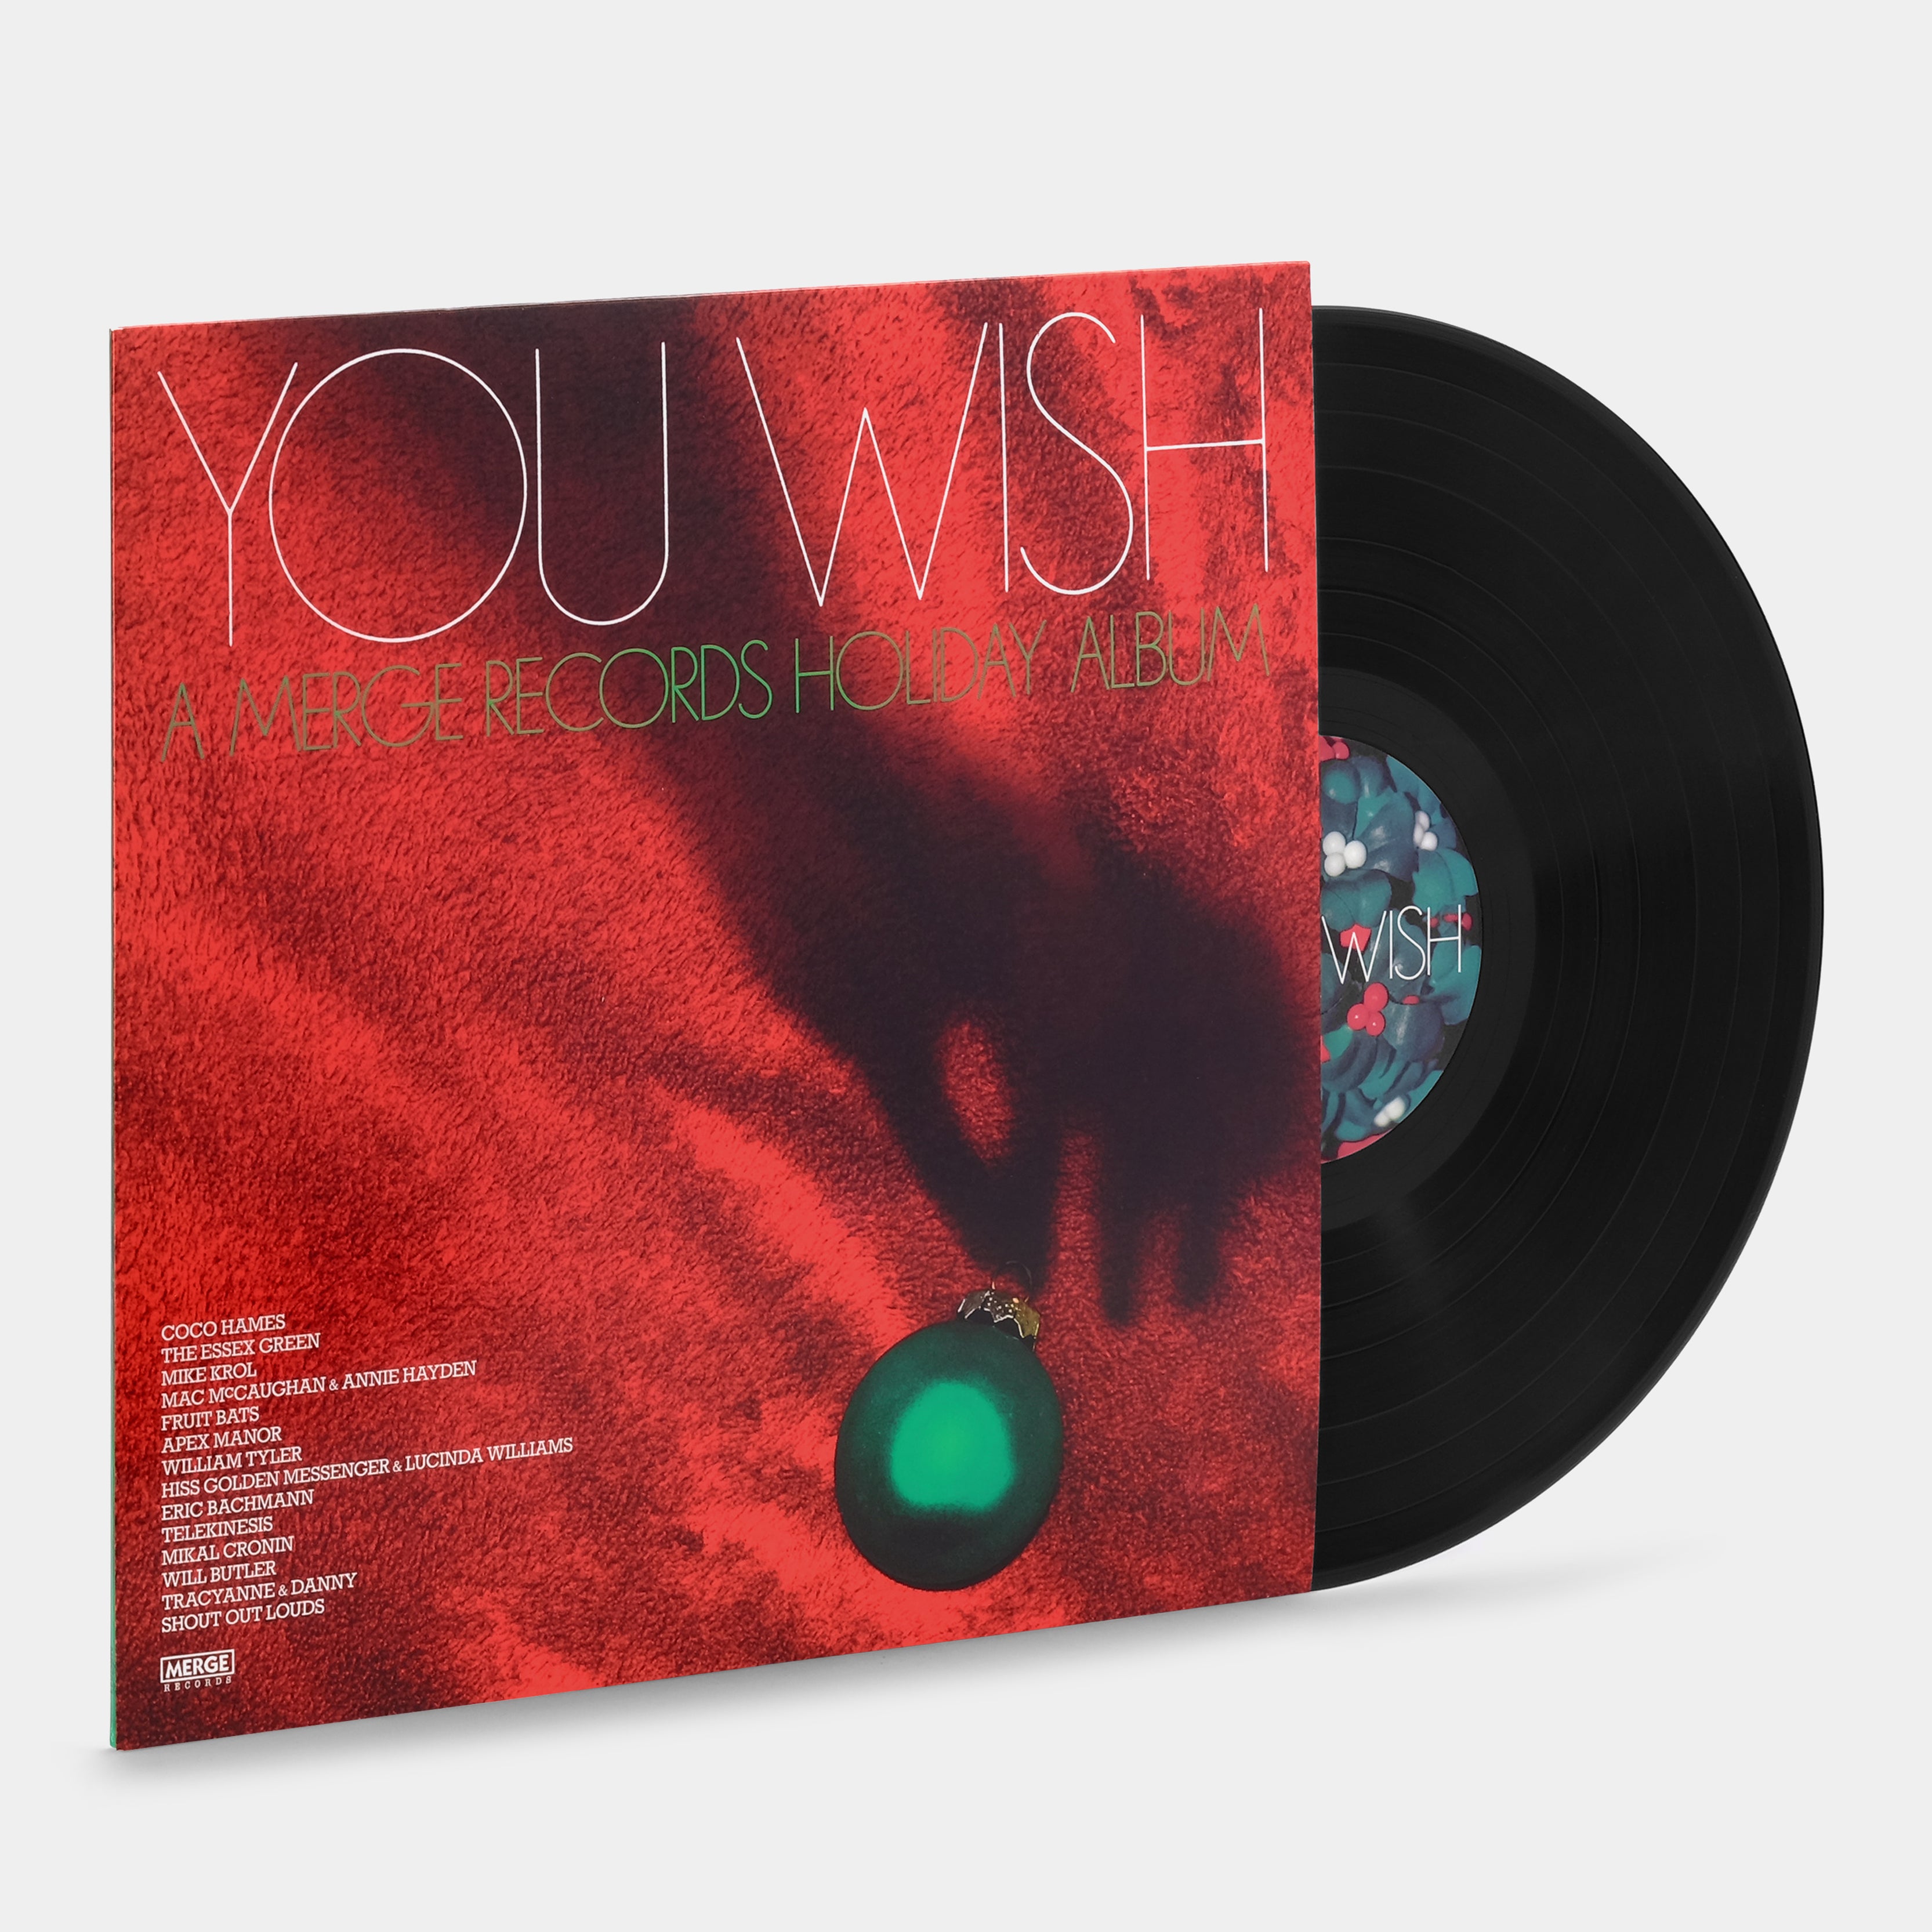 You Wish: A Merge Records Holiday Album LP Vinyl Record